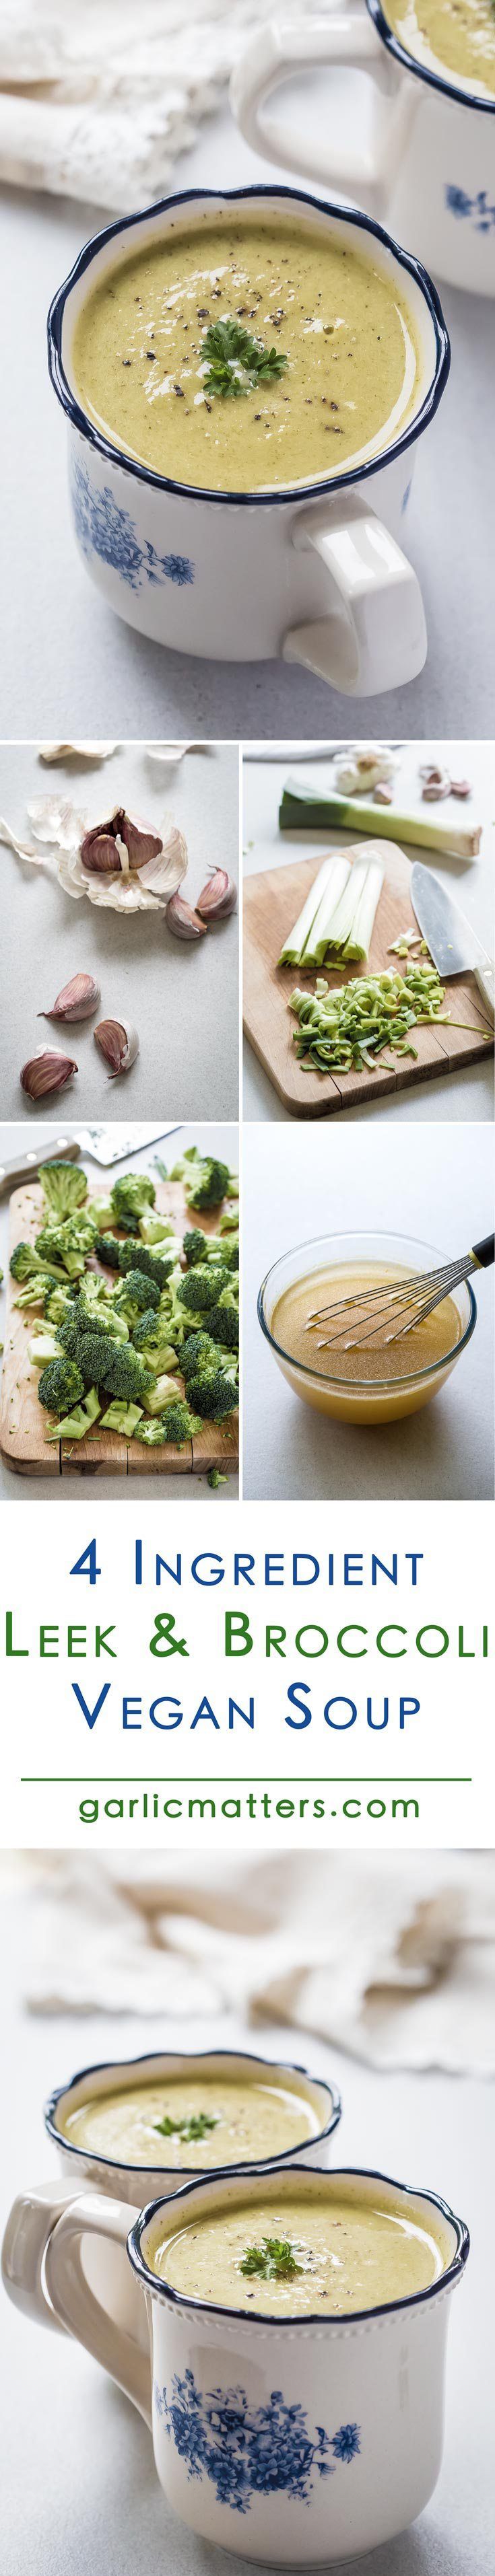 4 Ingredient Vegan Leek and Broccoli Soup